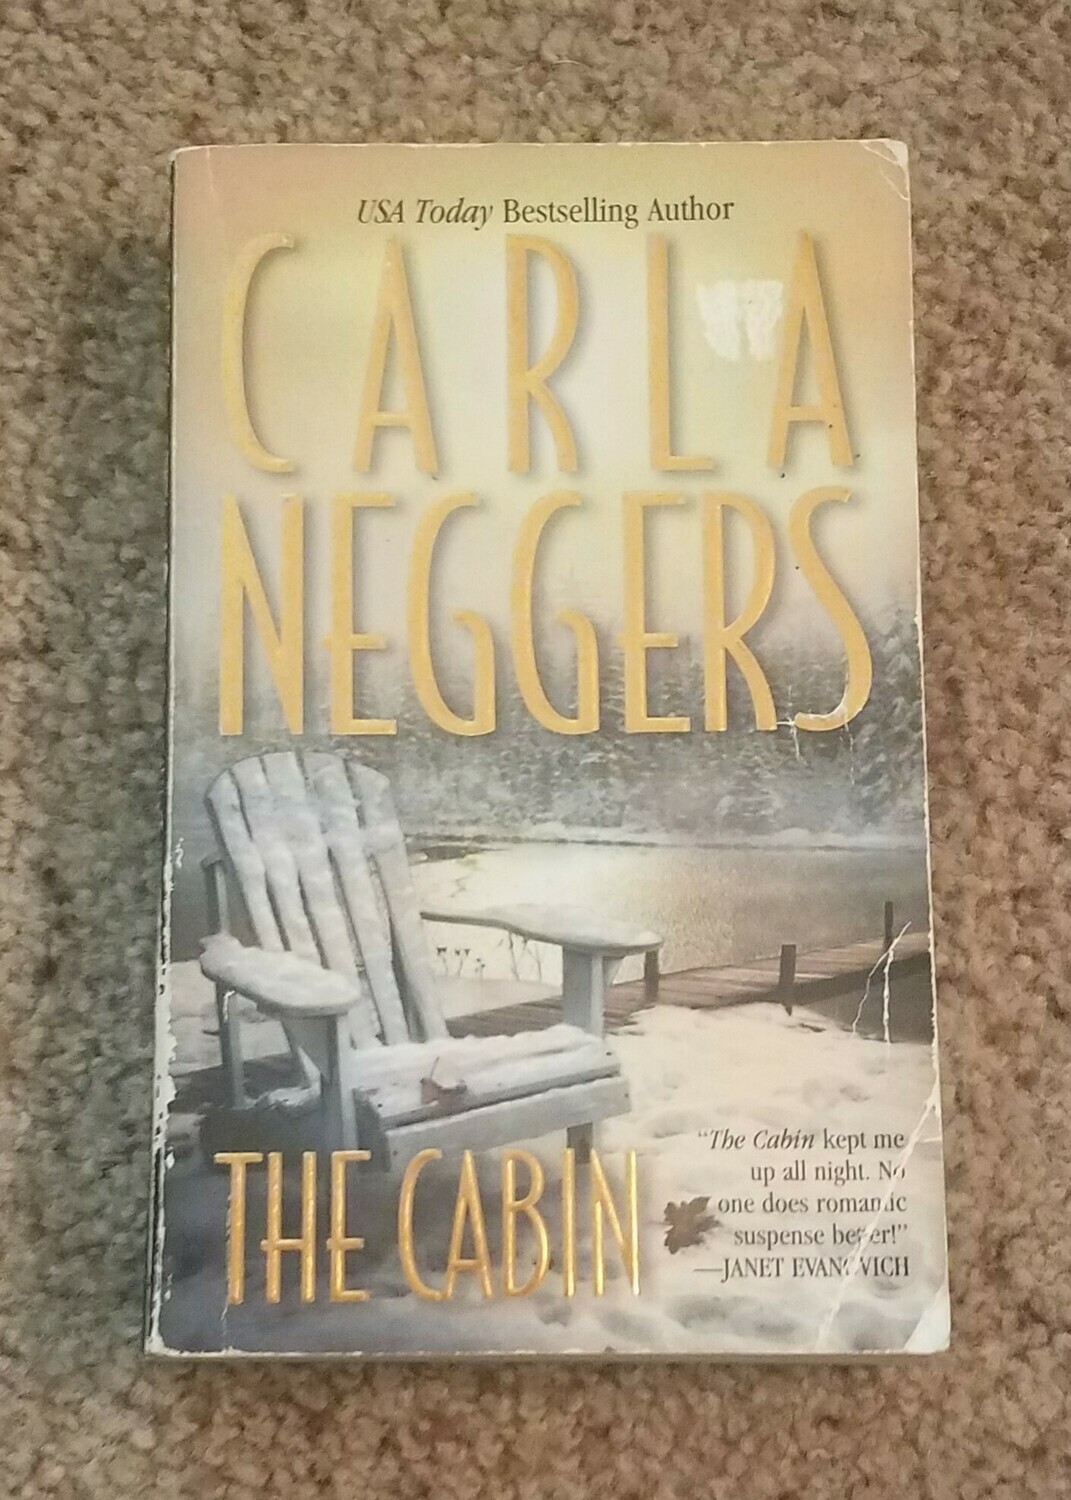 The Cabin by Carla Neggers